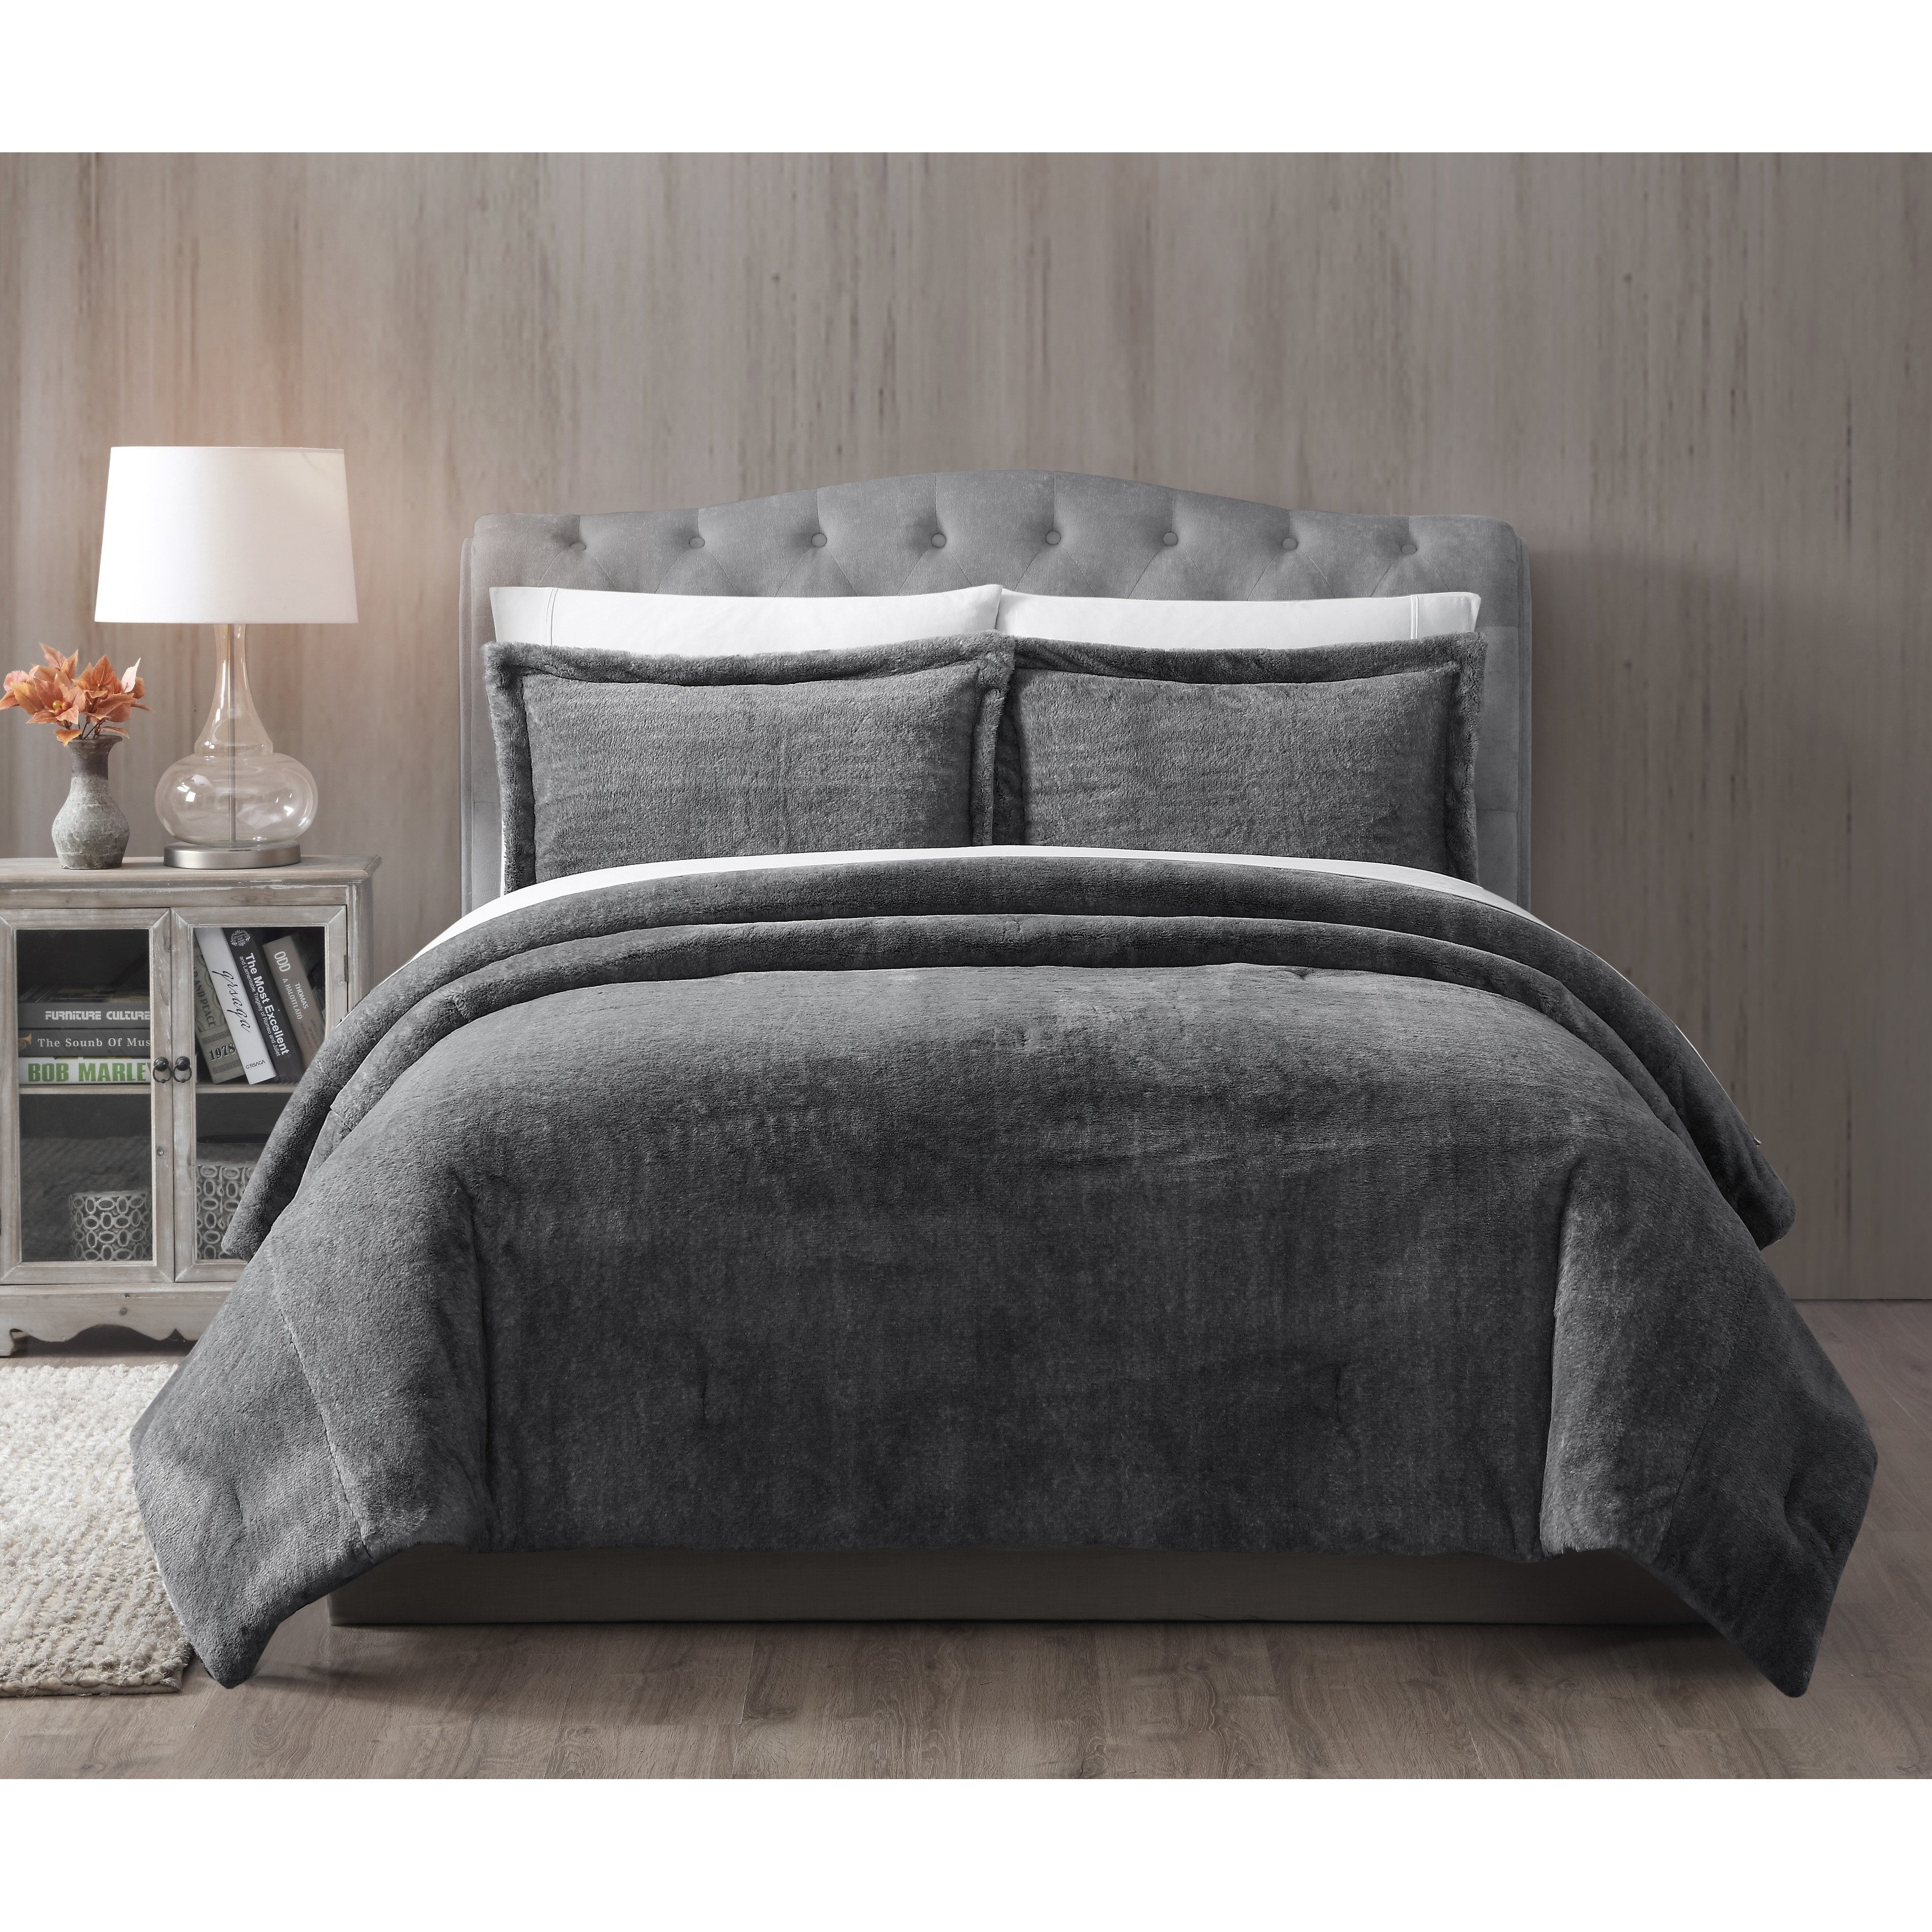 King Bedroom Comforter Set Beautiful asher Home Grey Faux Fur Bella 3 Piece forter